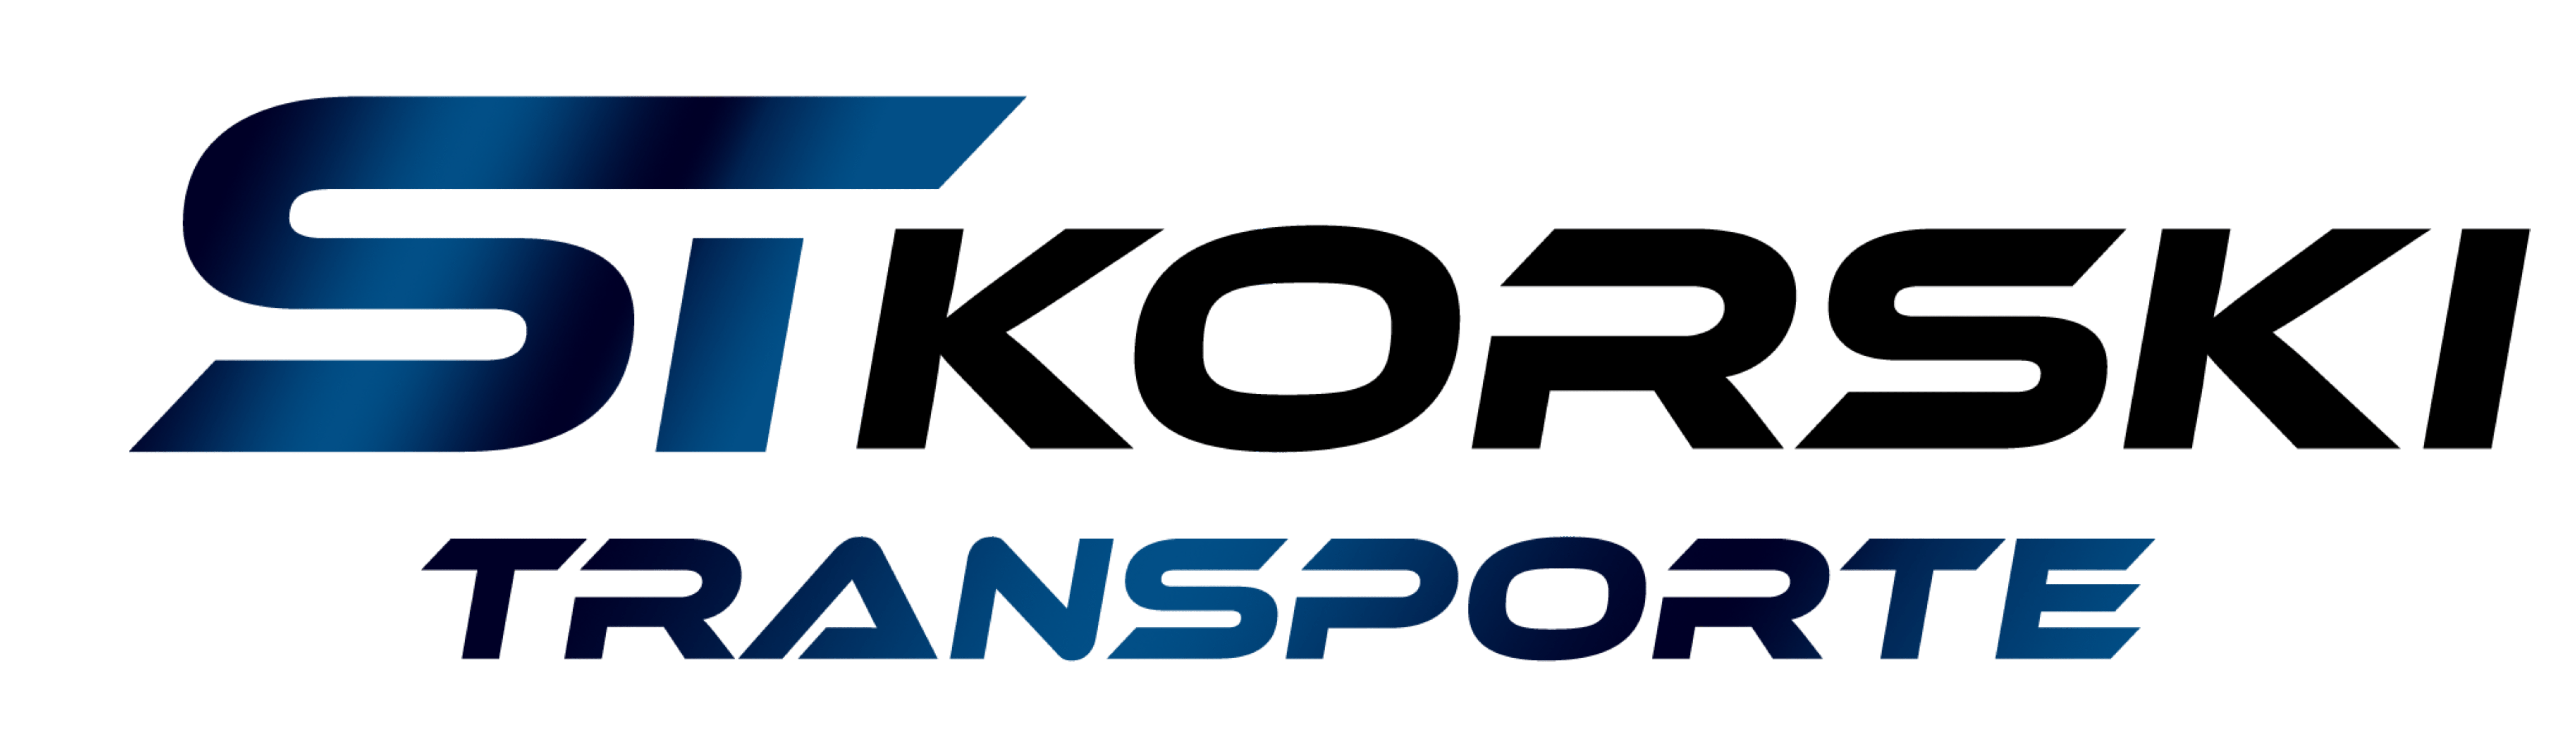 Sikorski Transporte GmbH